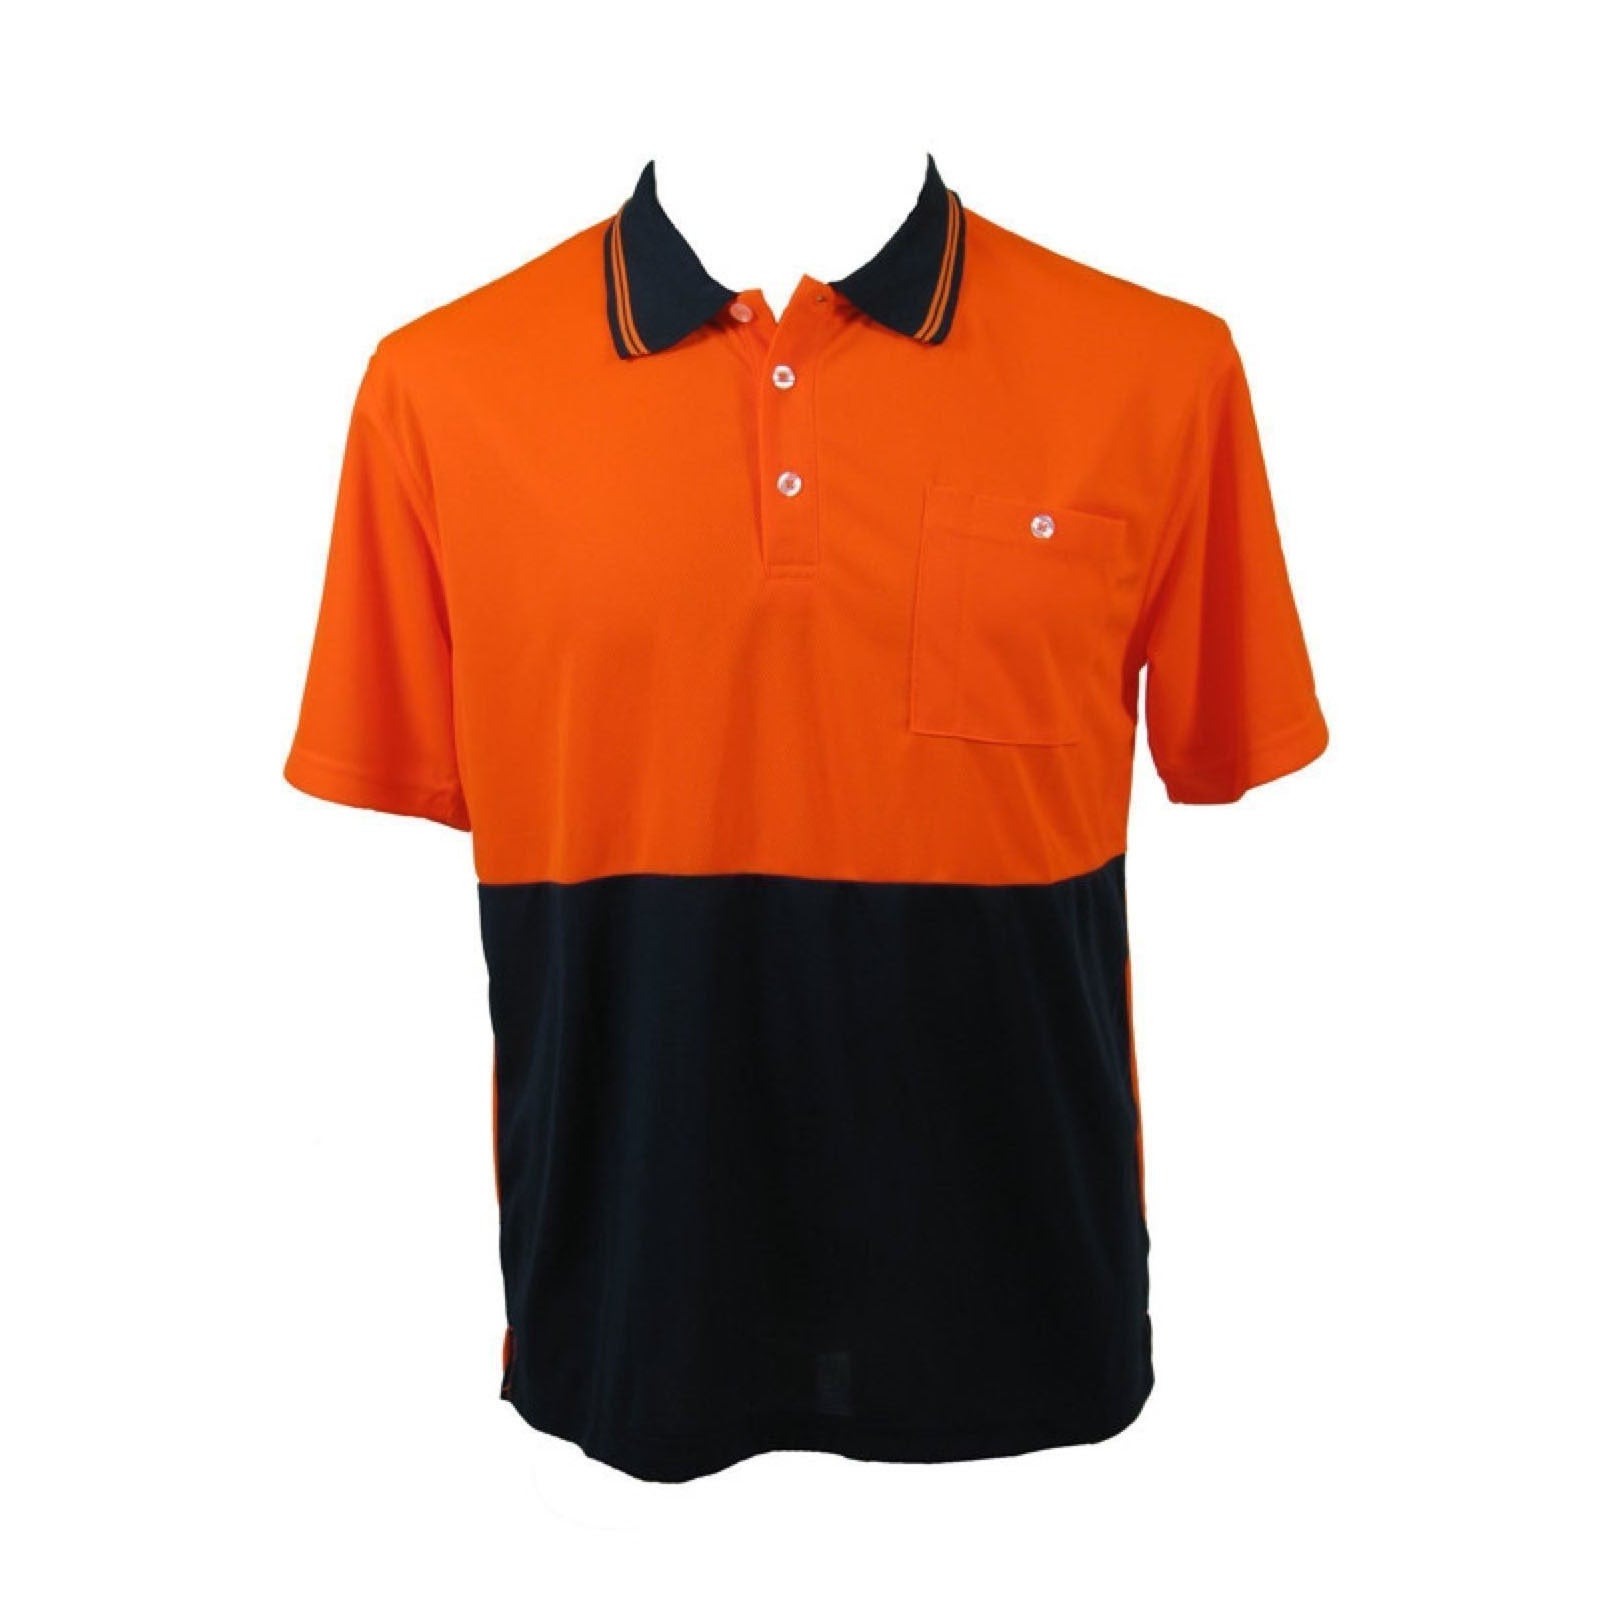 HI VIS Polo Shirt Top Tee Safety Workwear Short Sleeve Breathable Micro Mesh